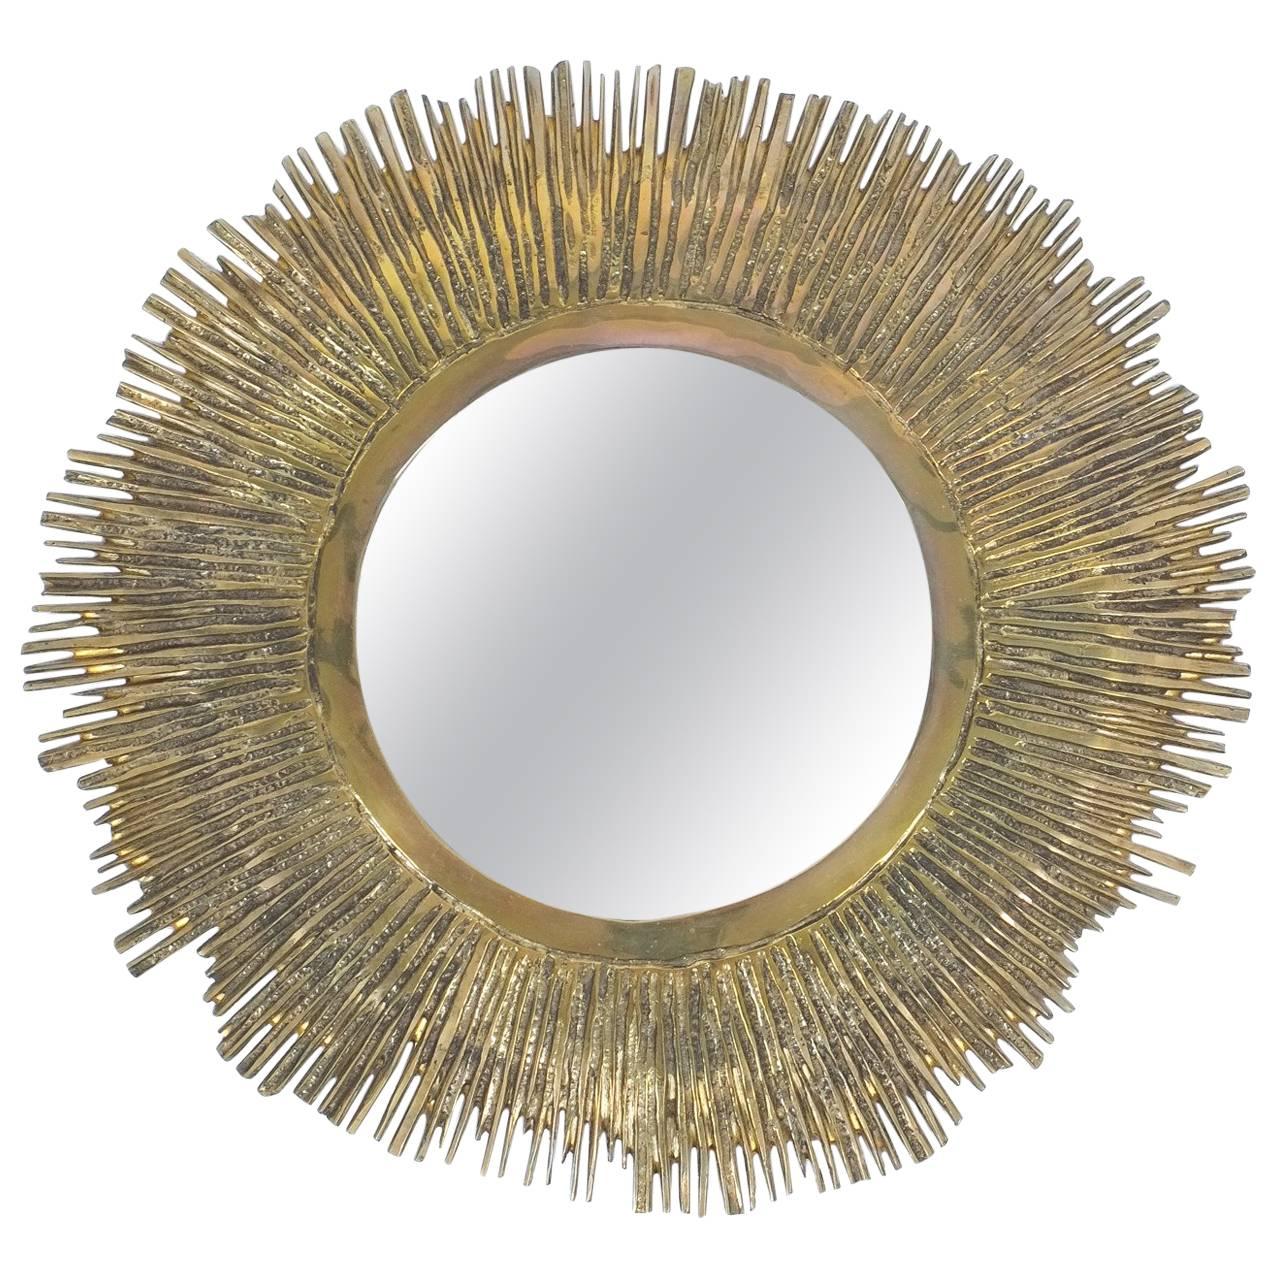 Solid Brass Sunburst Midcentury Mirror, France, circa 1955